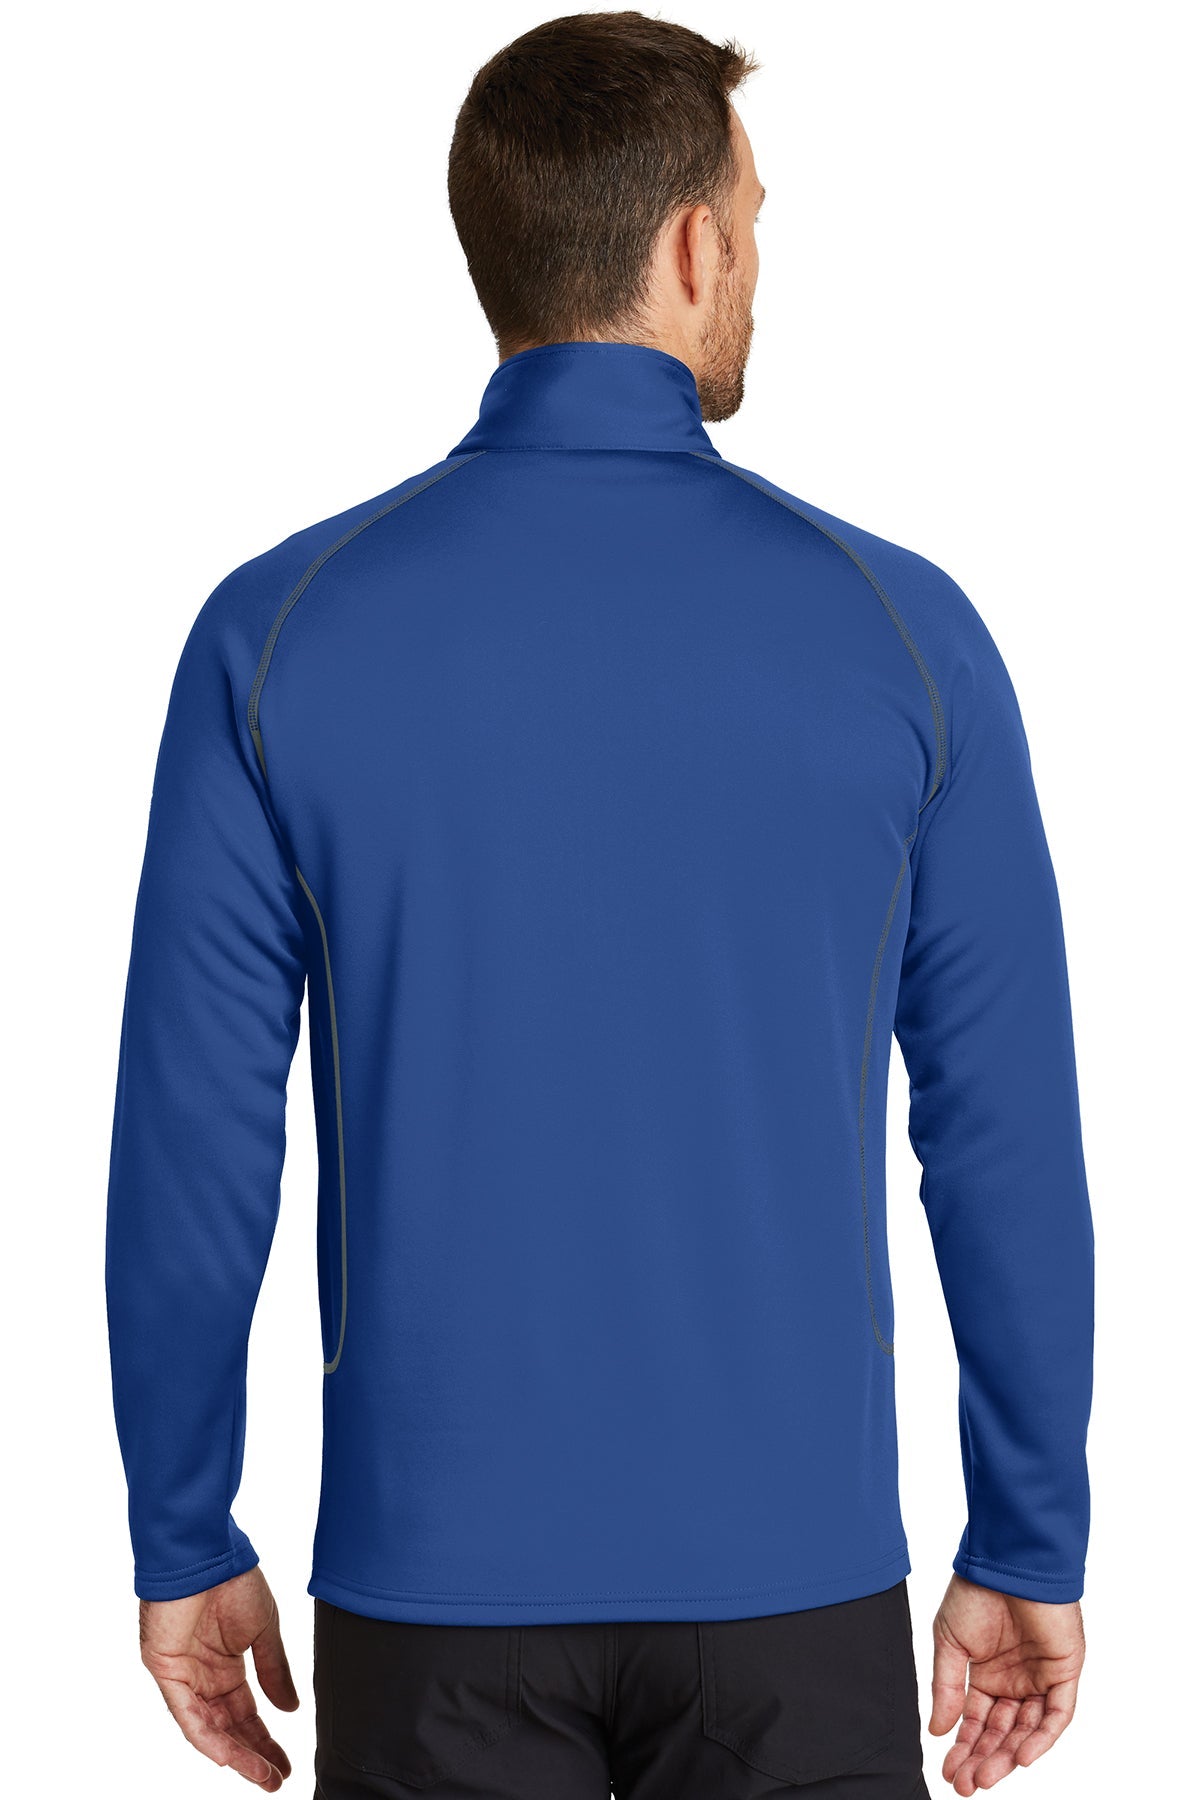 eddie bauer_eb236 _cobalt blue_company_logo_sweatshirts